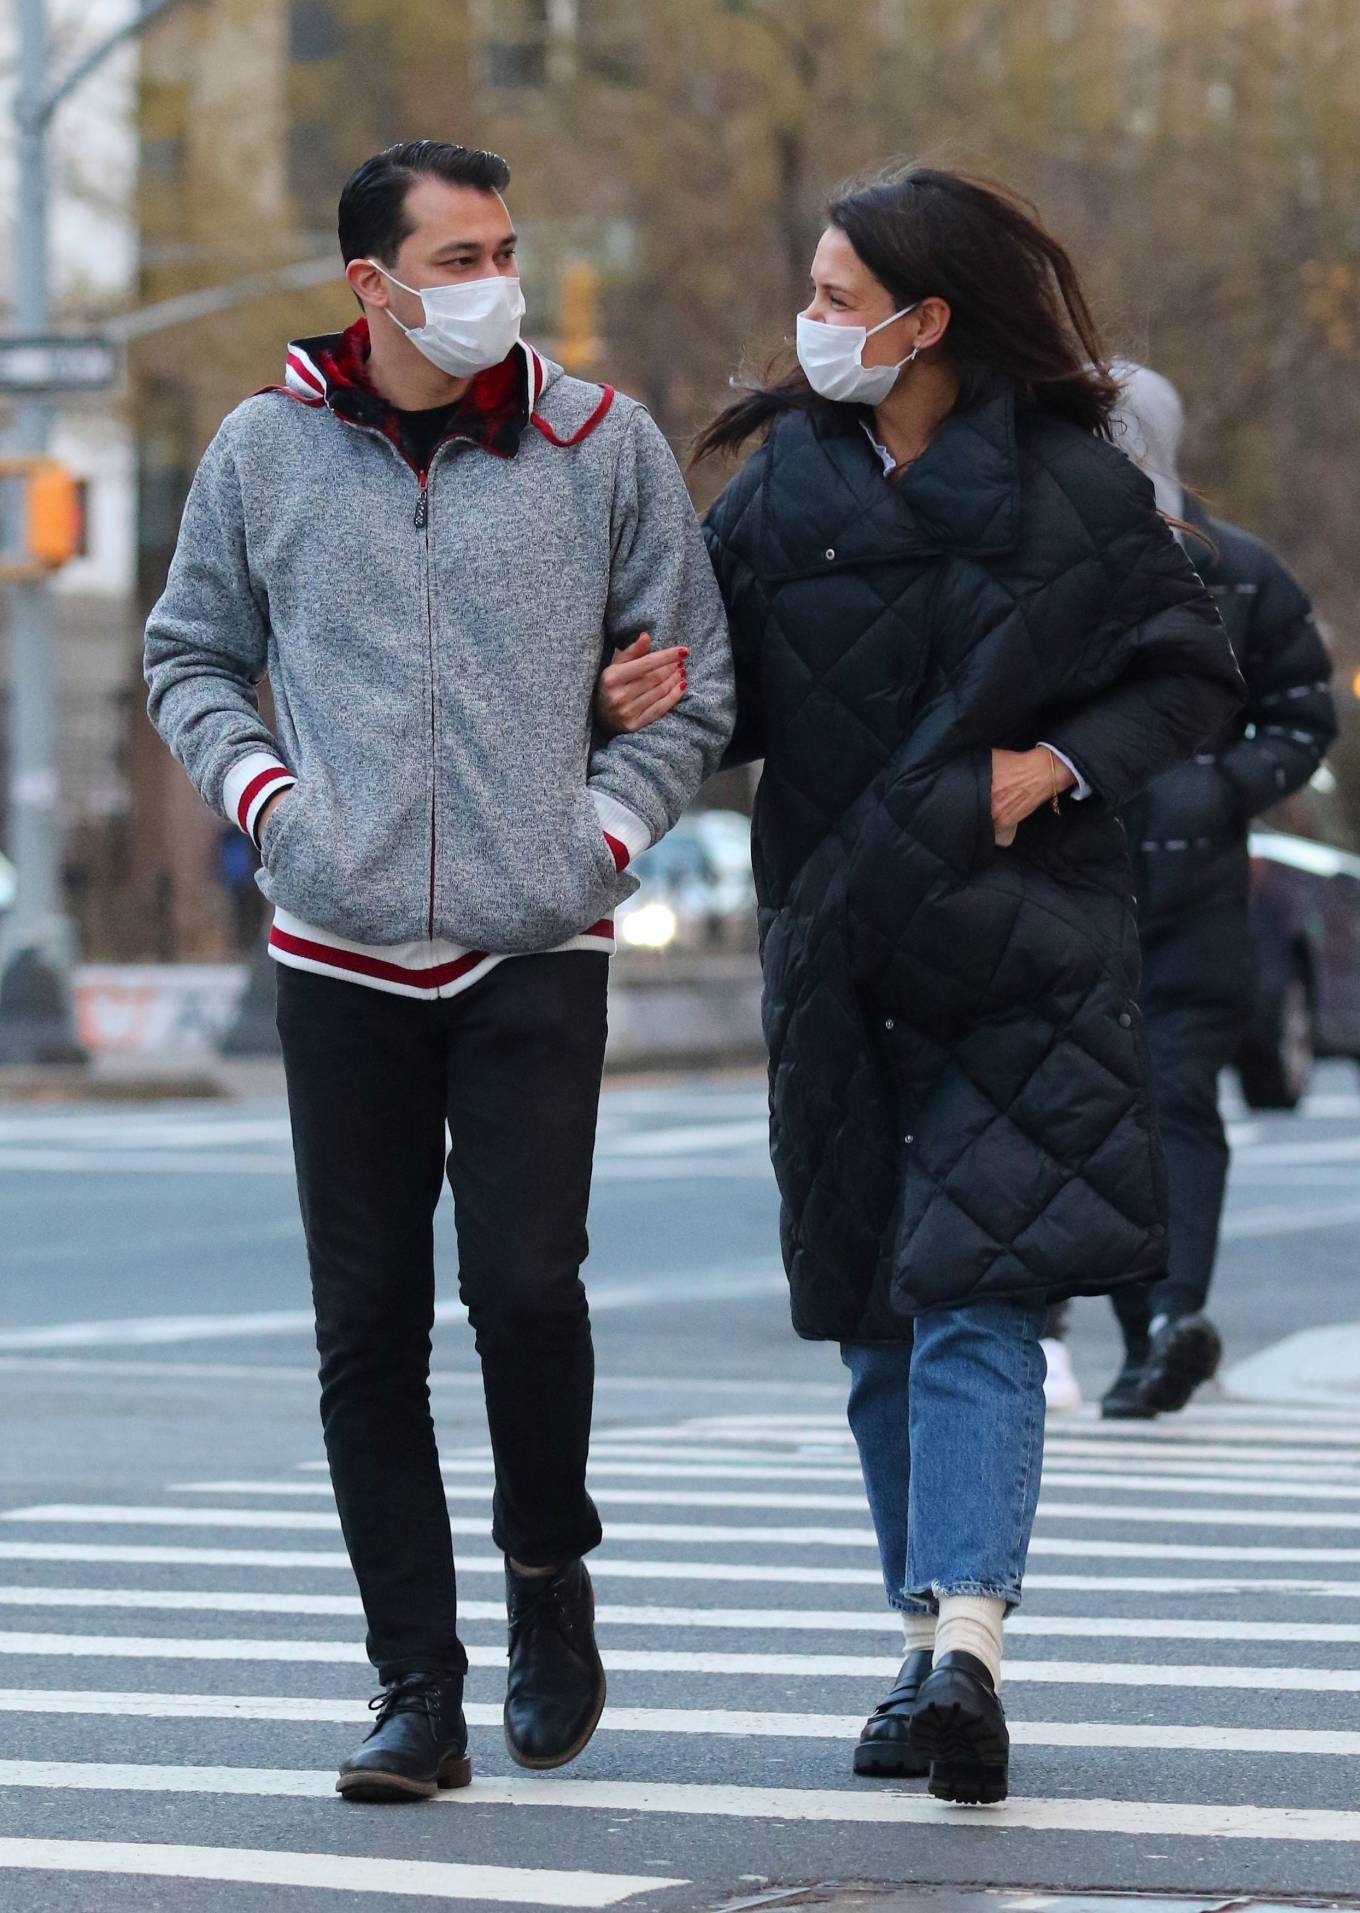 Katie Holmes – With her boyfriend Emilio Vitolo Jr. in Manhattan’s Soho neighborhood